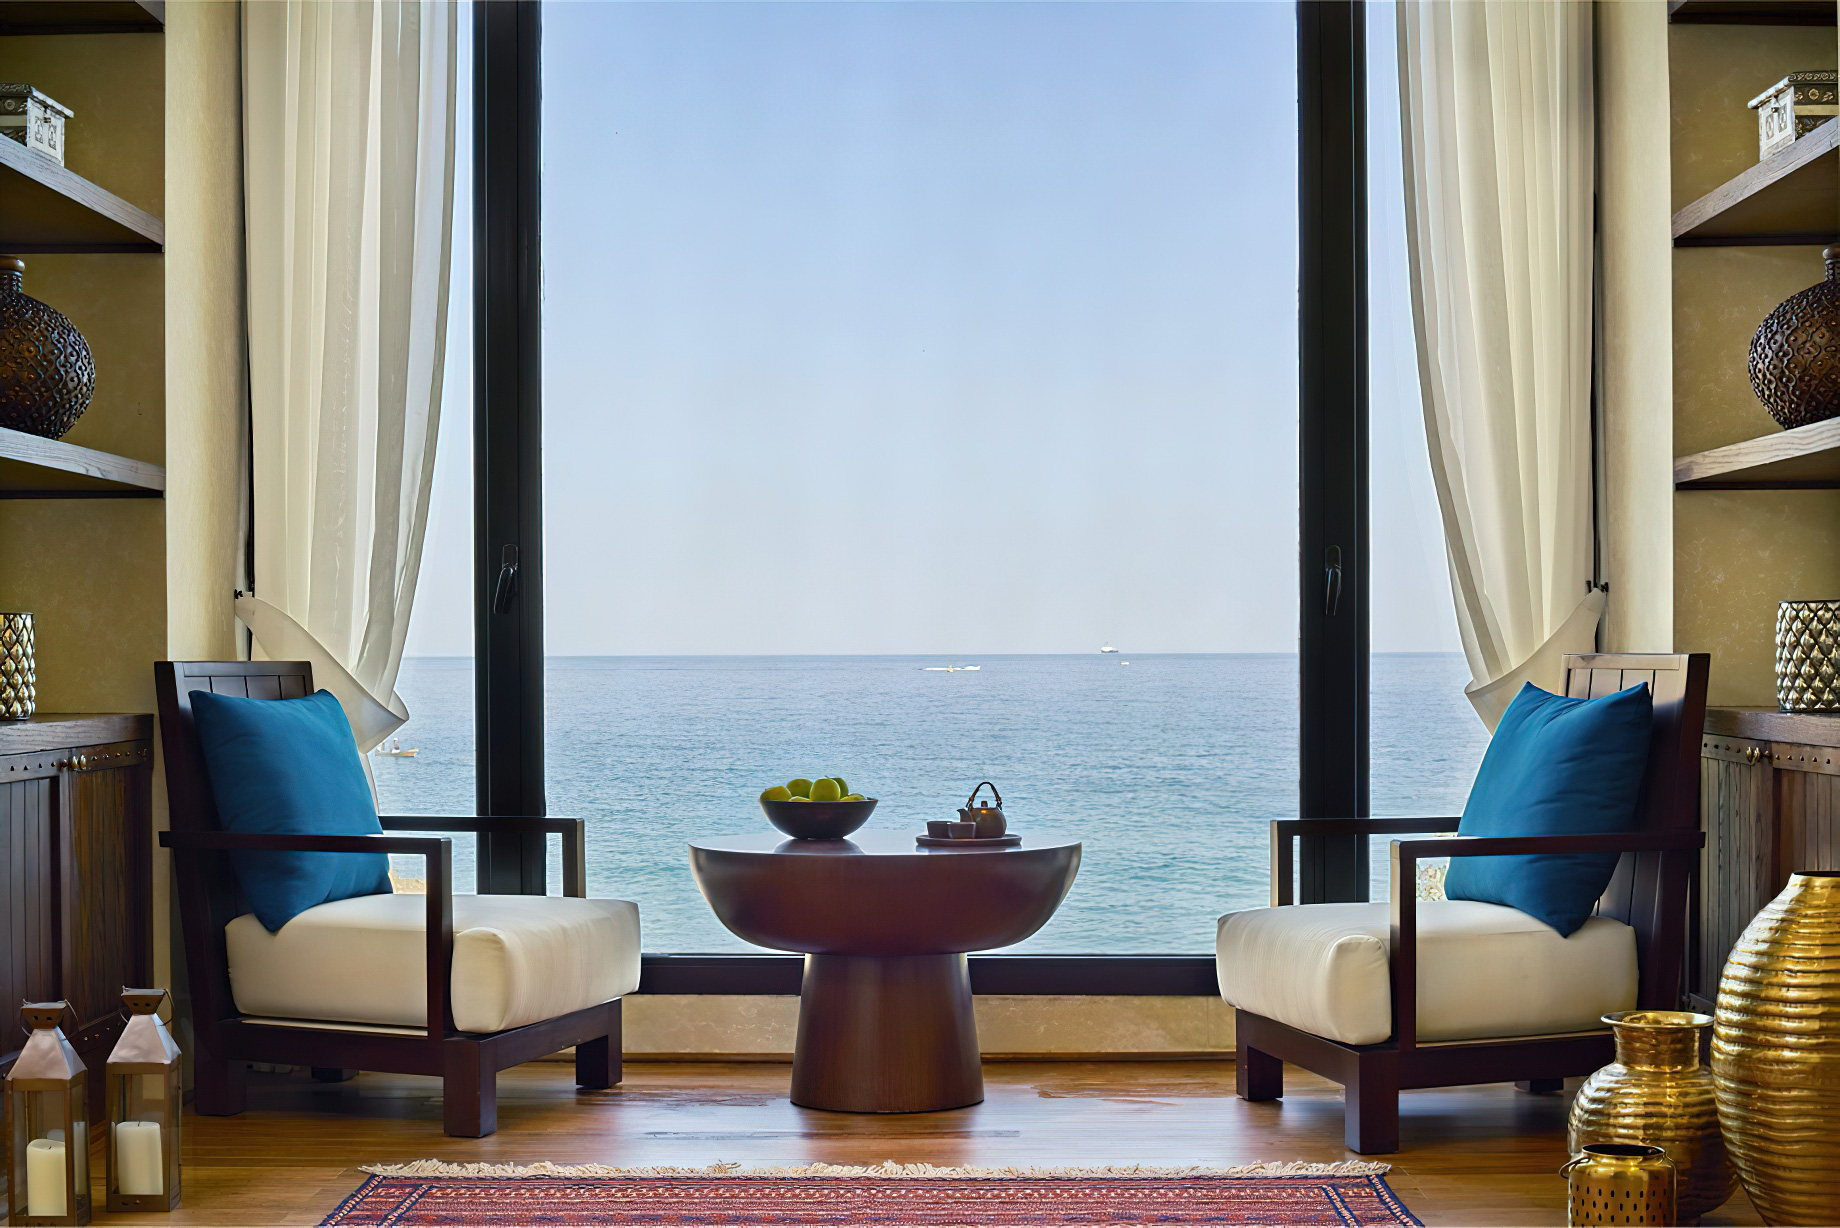 Al Bustan Palace, A Ritz-Carlton Hotel – Muscat, Oman – Spa Ocean View